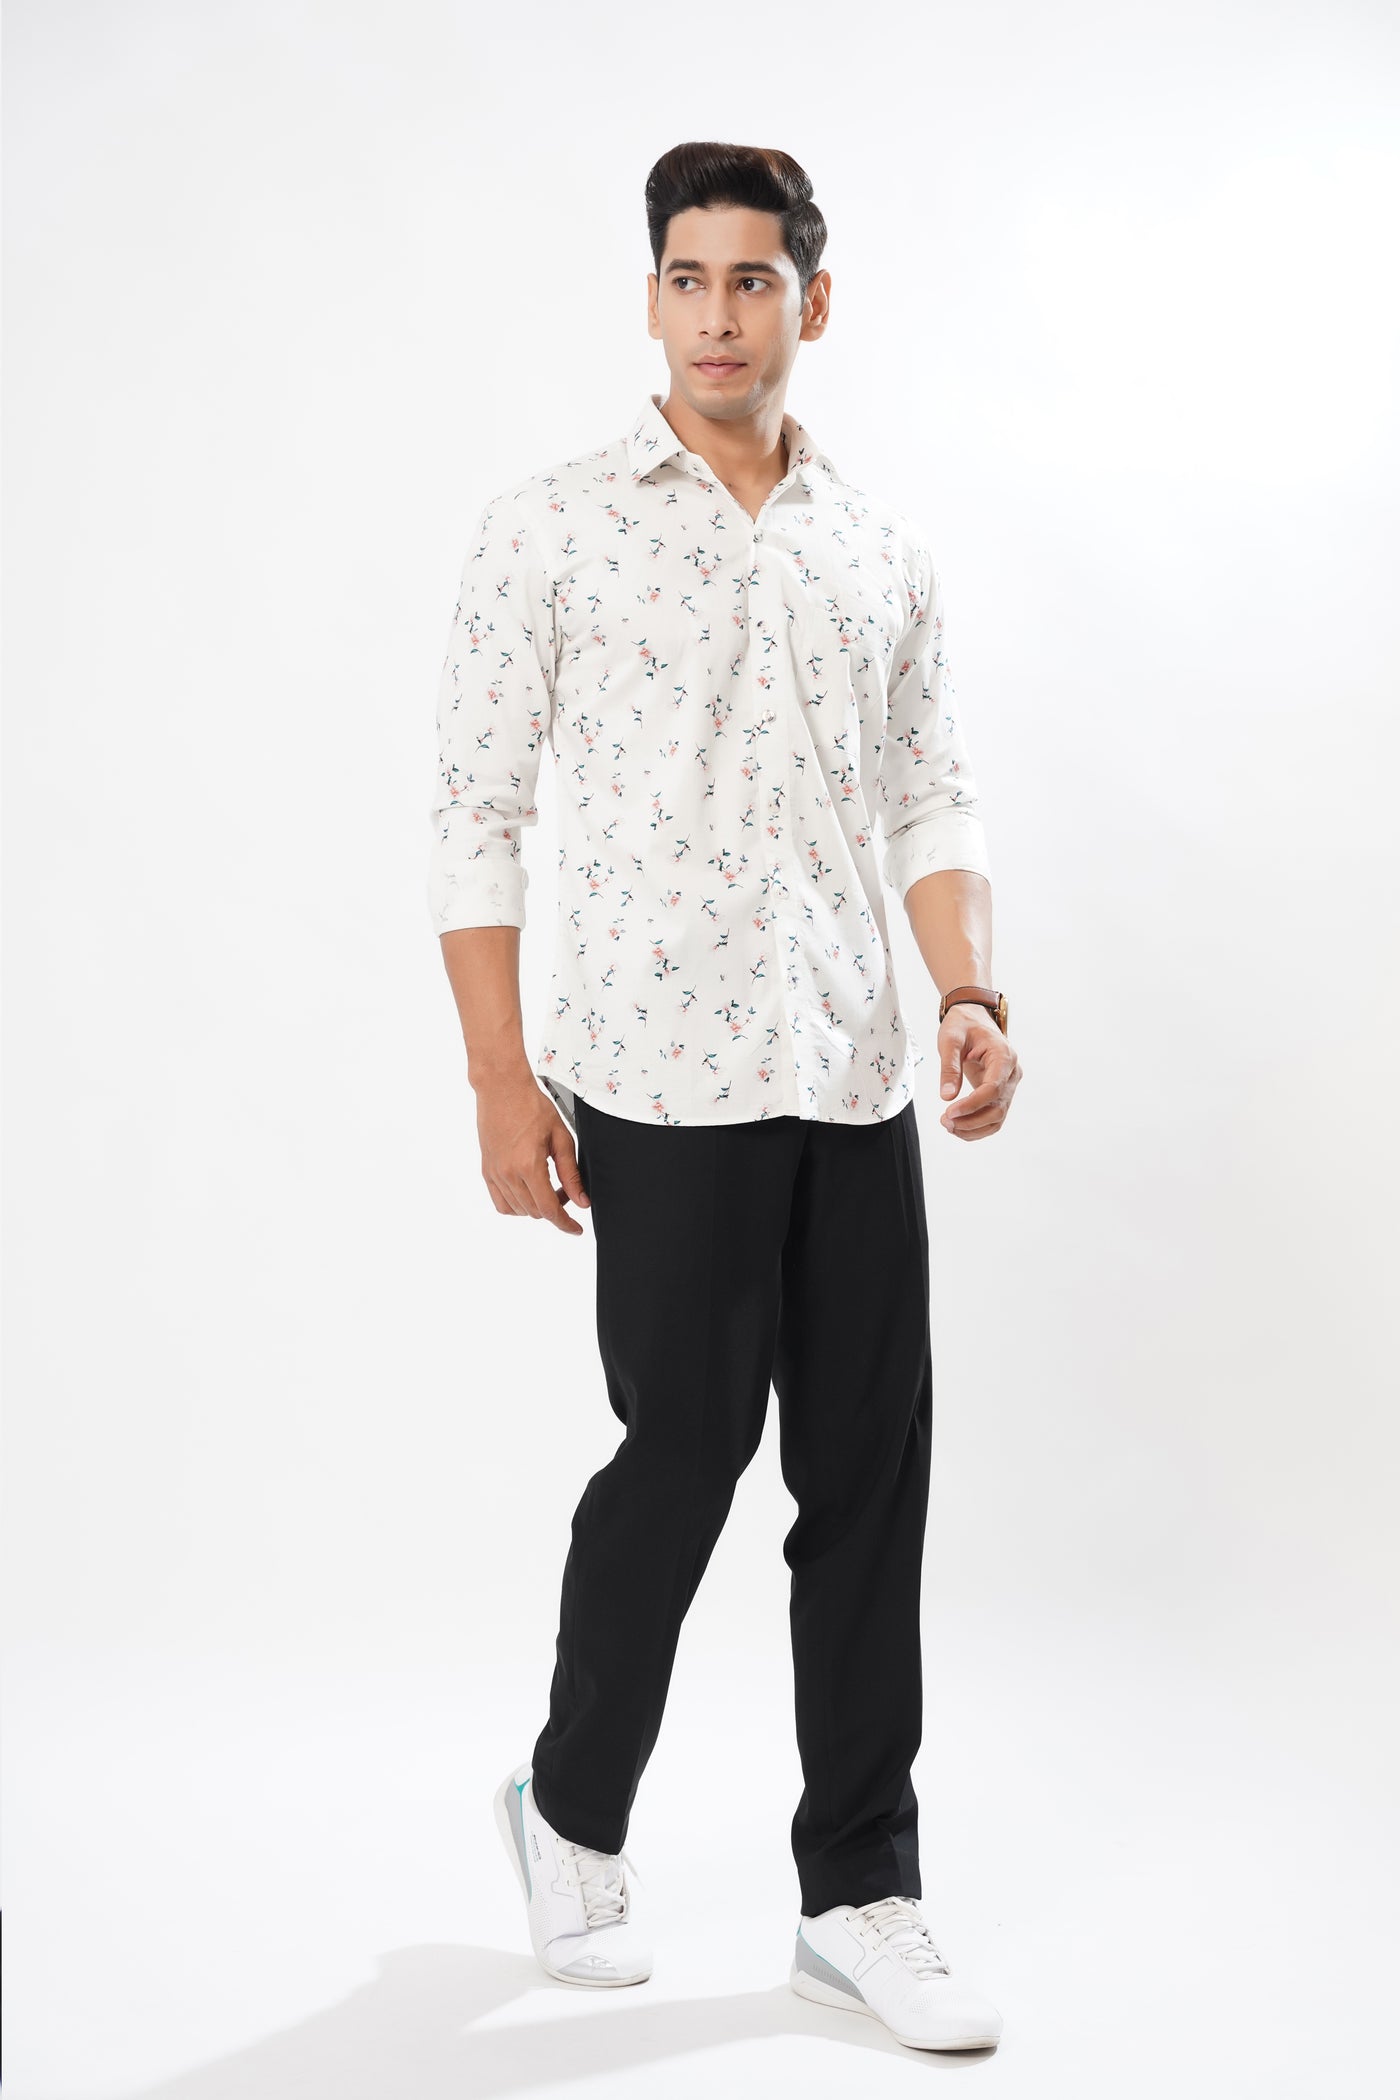 Bright White with Flowers Printed Super Soft Premium Designed Cotton Shirt